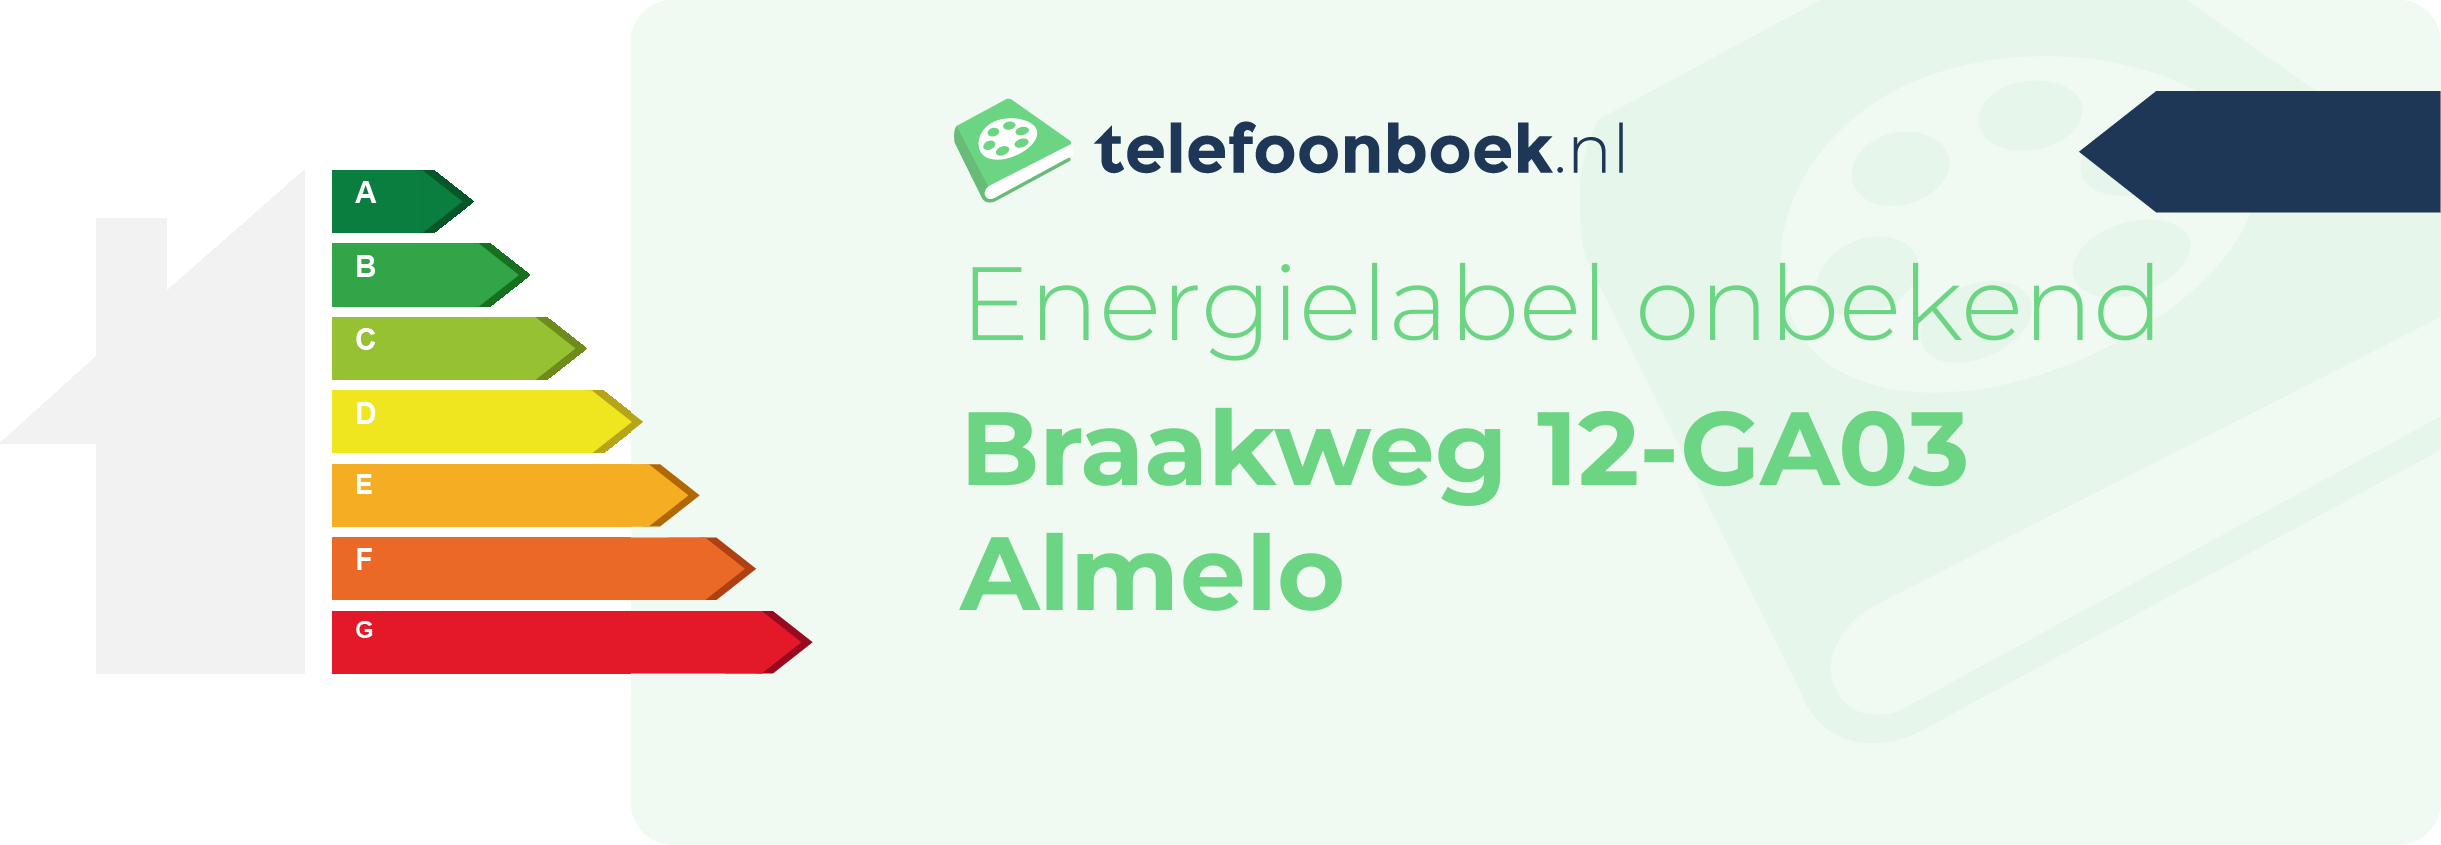 Energielabel Braakweg 12-GA03 Almelo